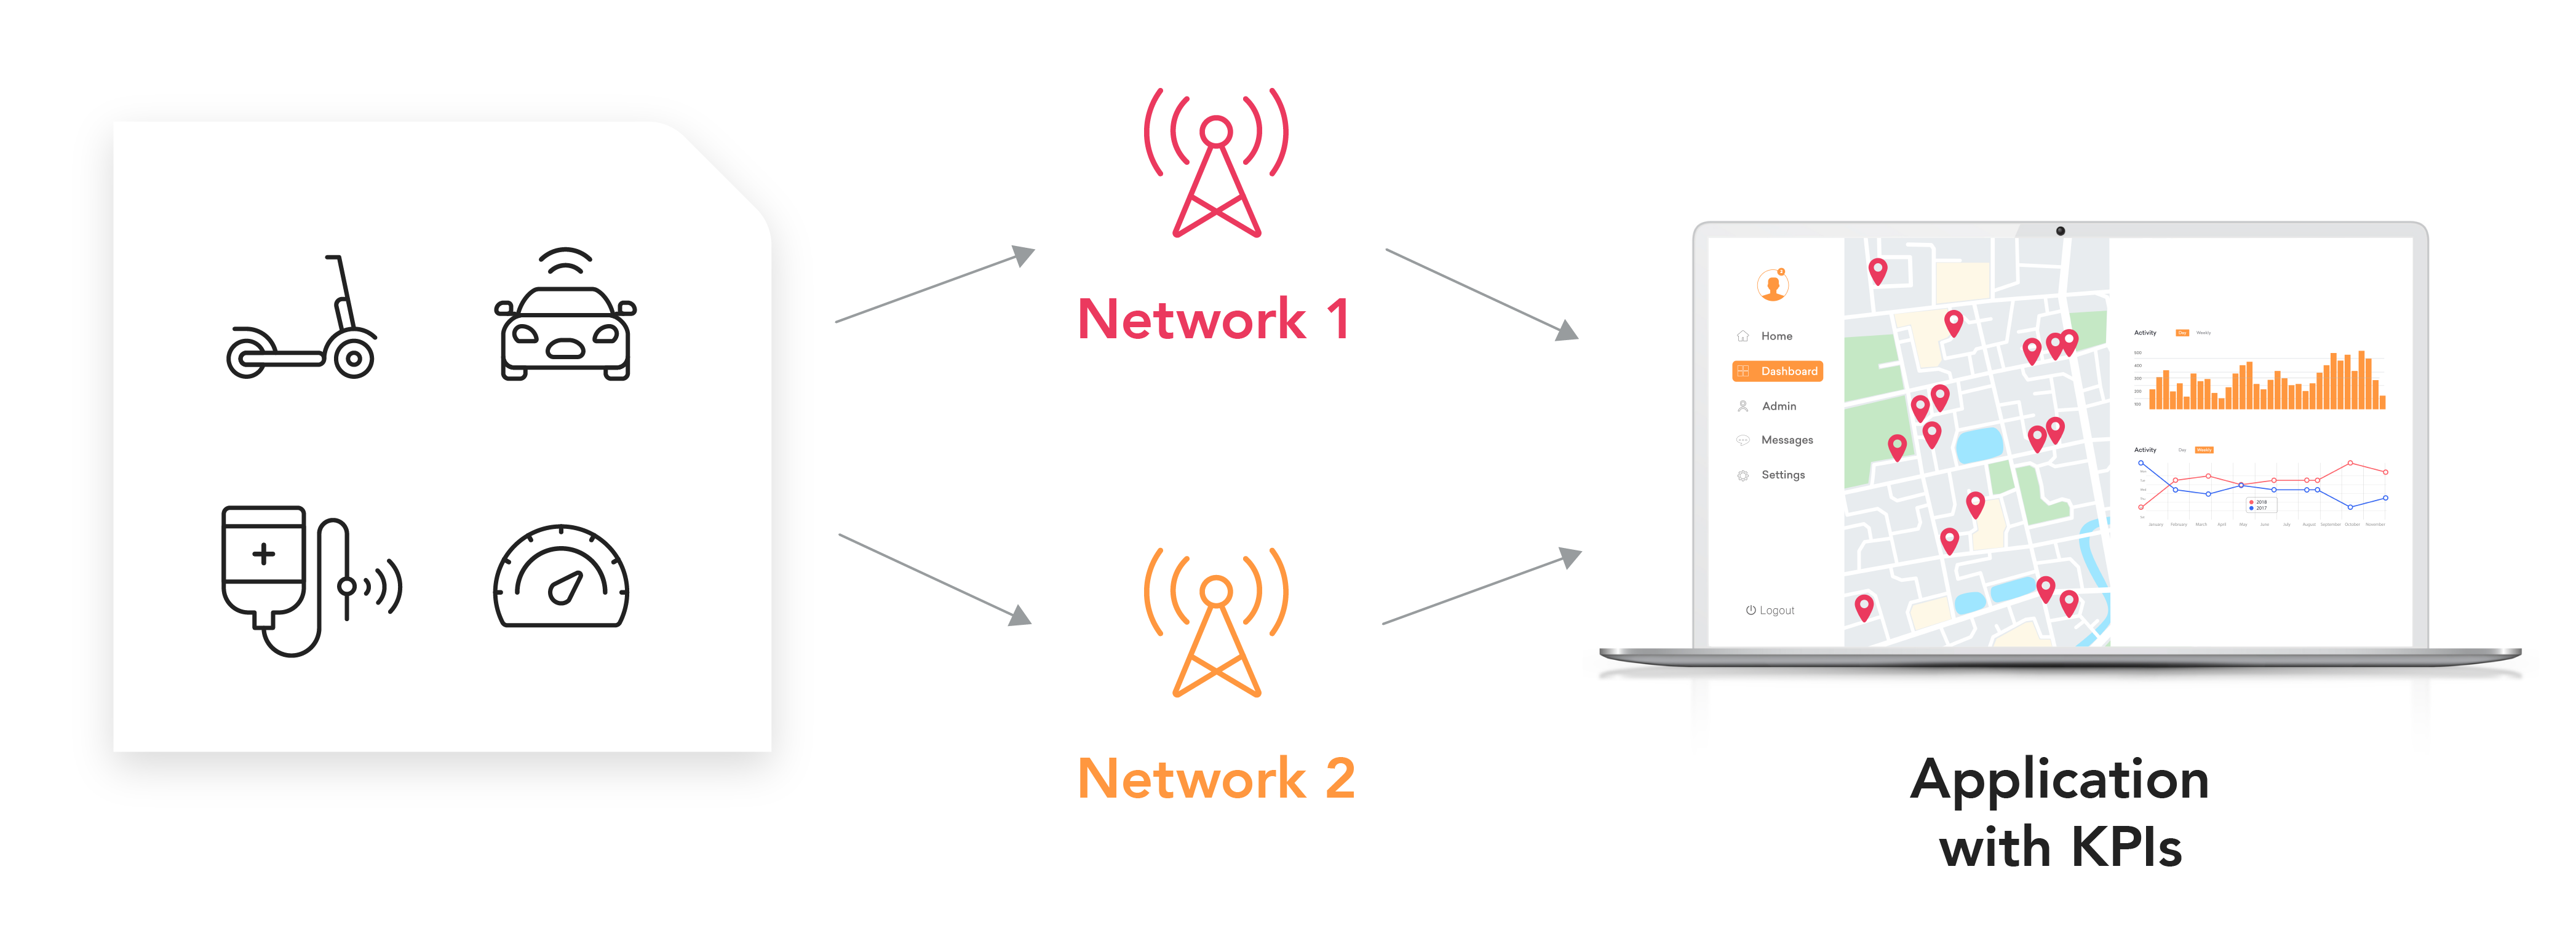 network-redundancy-model